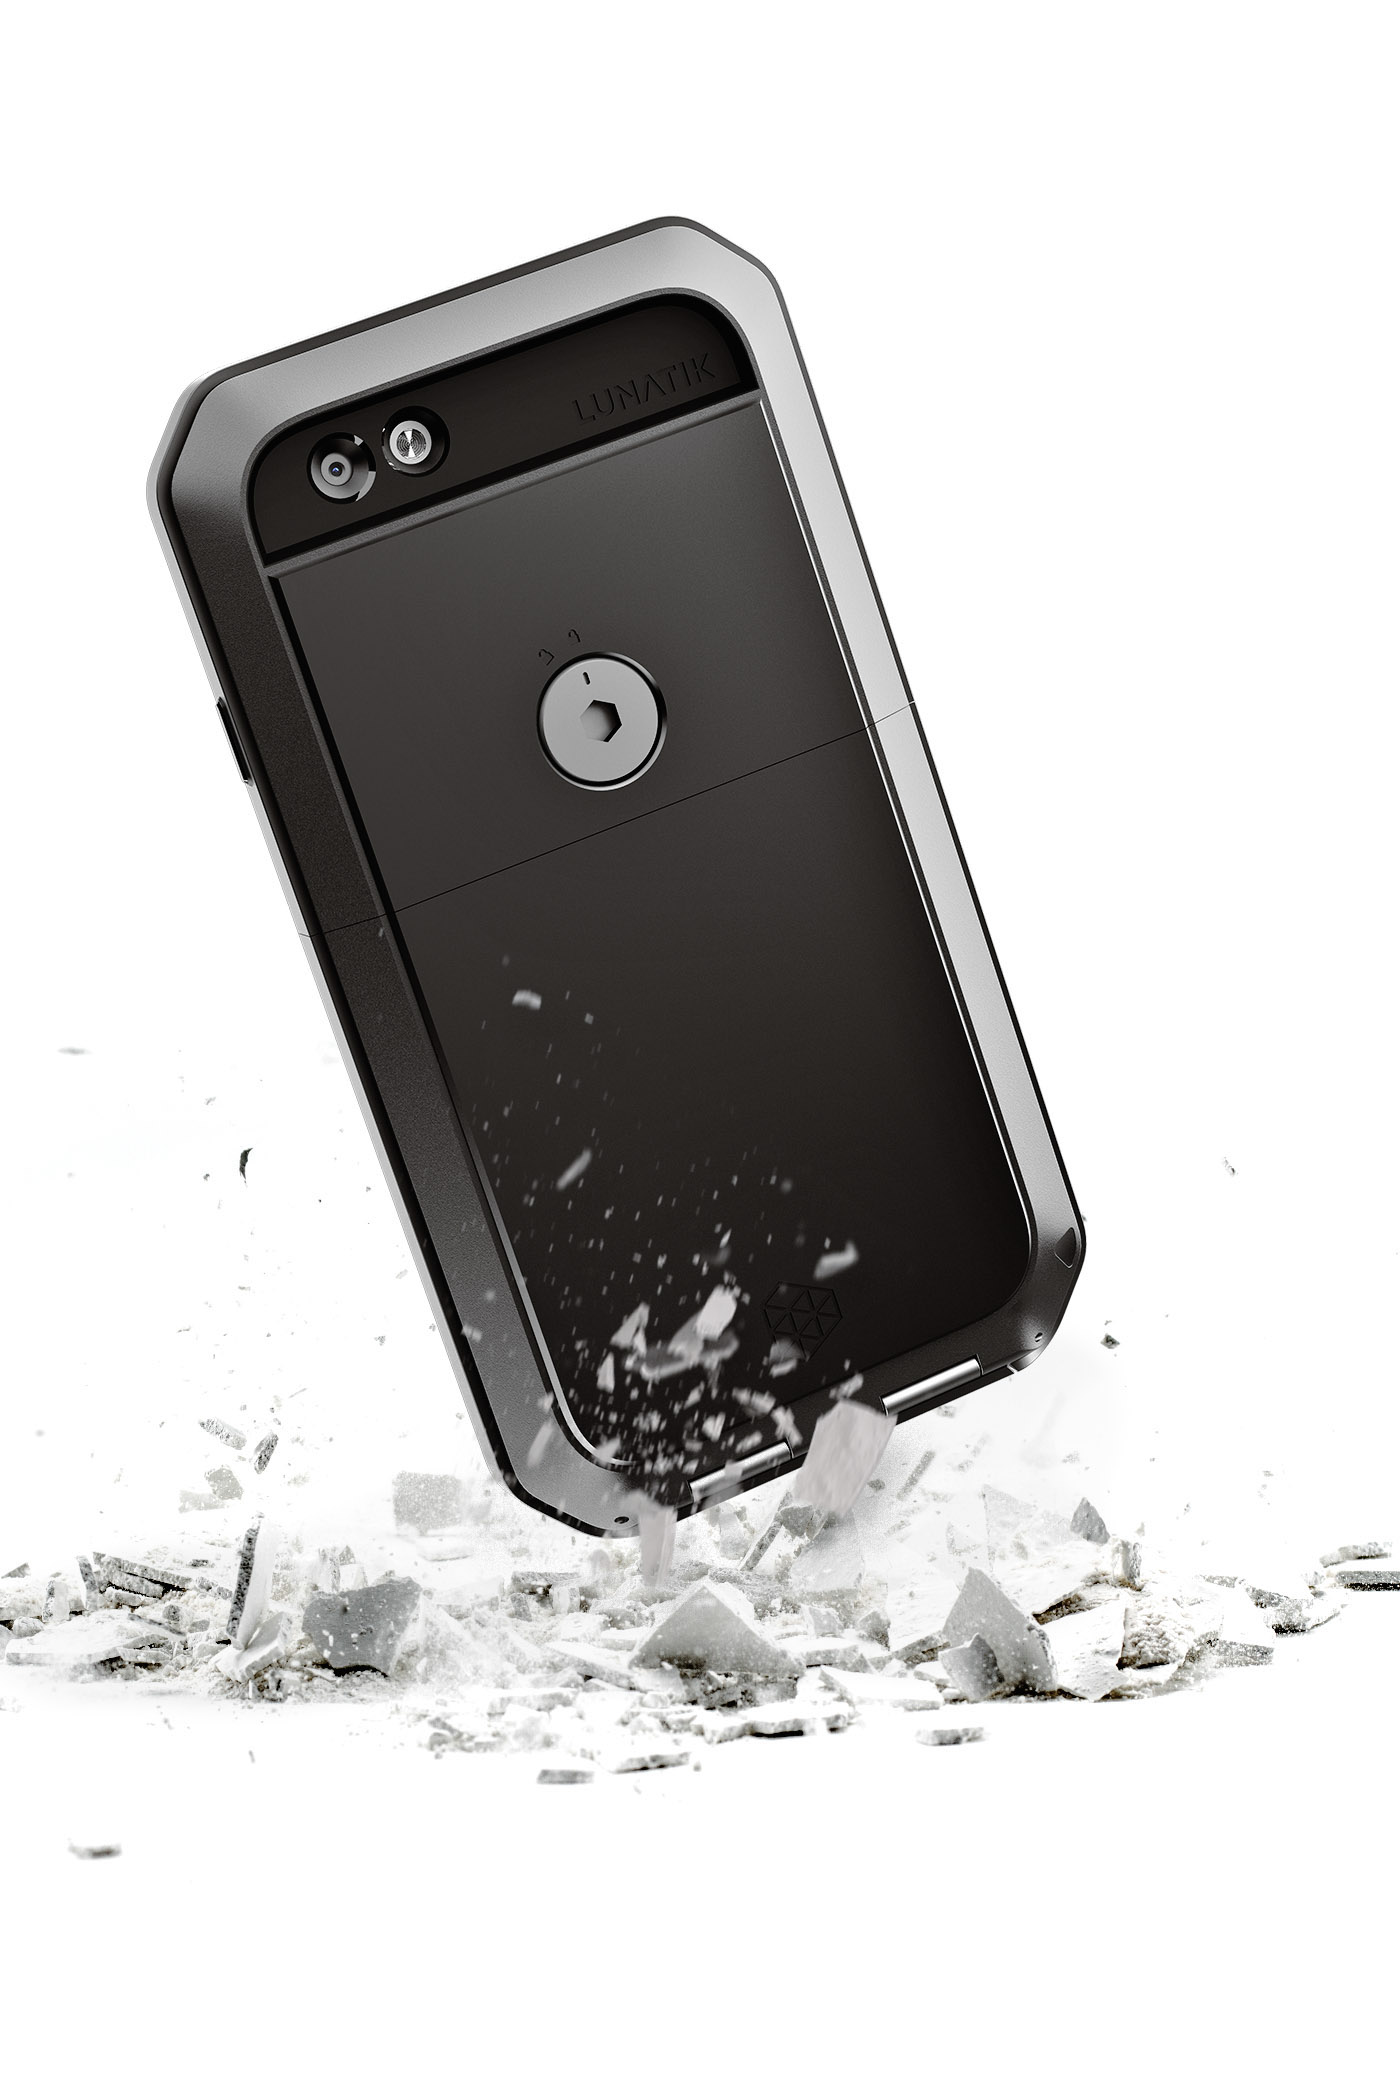 LunaTik taktik water waterproof iphone case Composite Packaging mnml